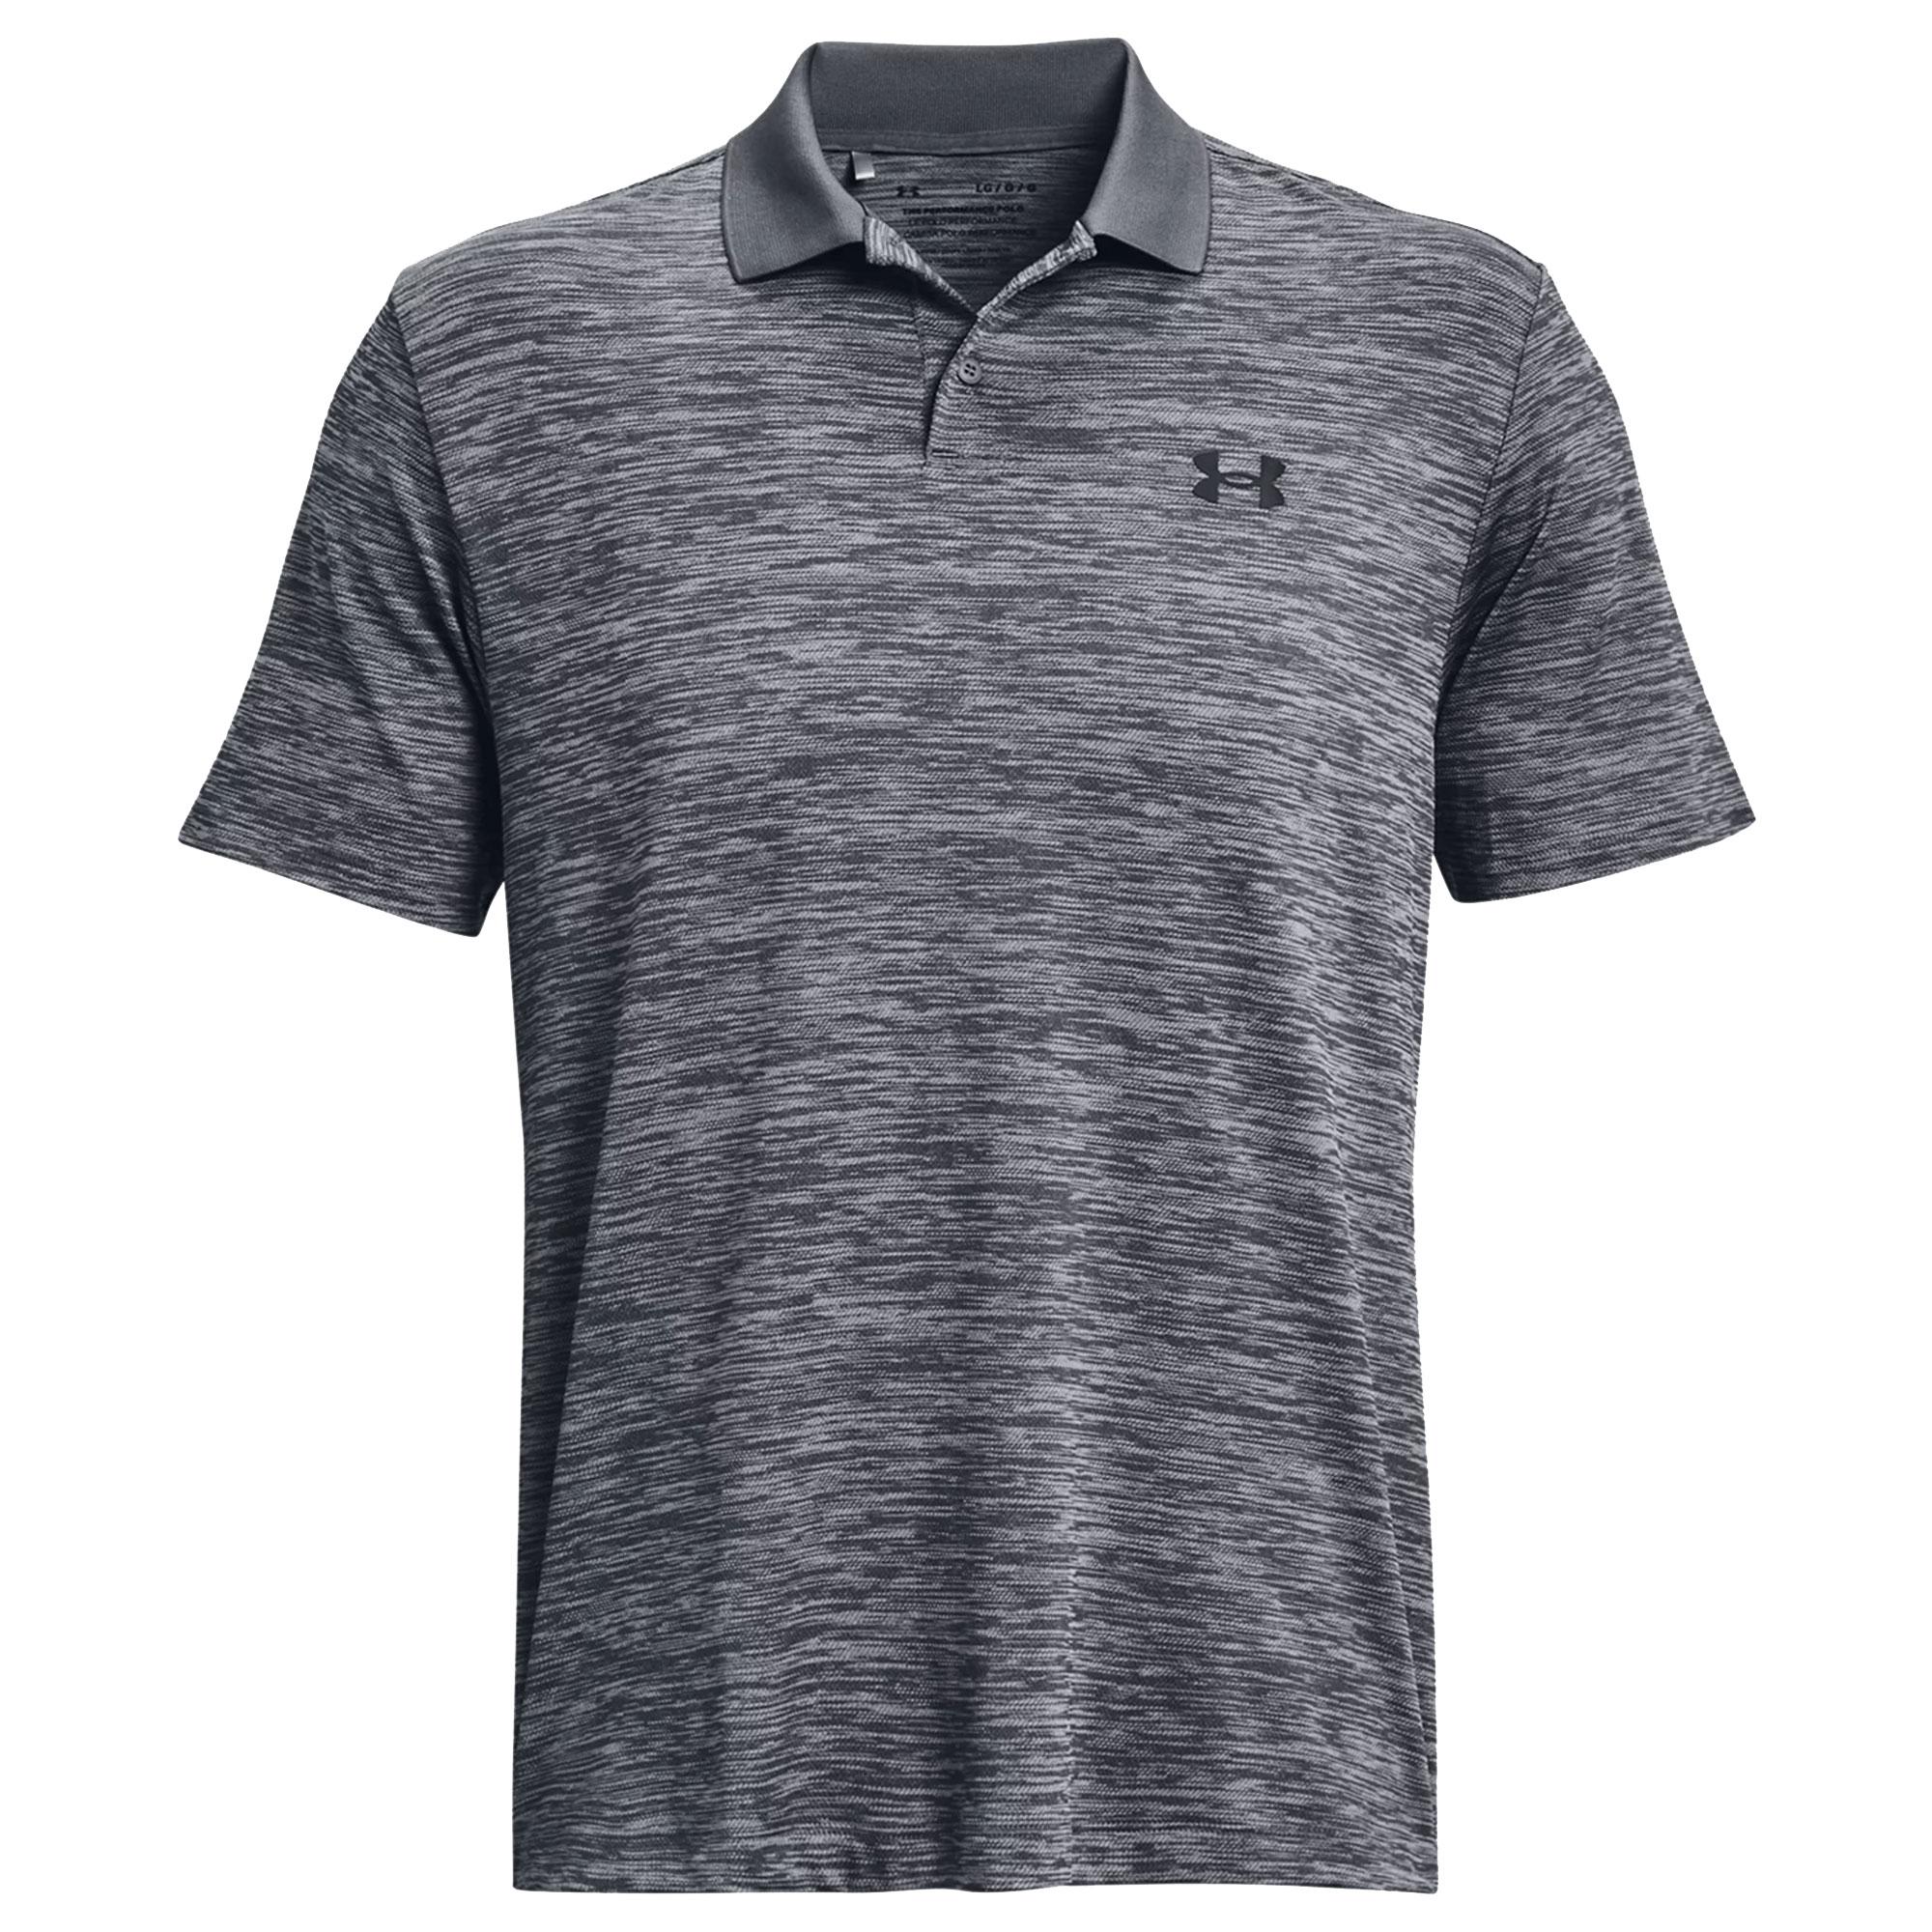 https://www.golfgeardirect.co.uk/images/product/full/Performance-3.0-Golf-Polo-Shirt---Pitch-Grey.jpg